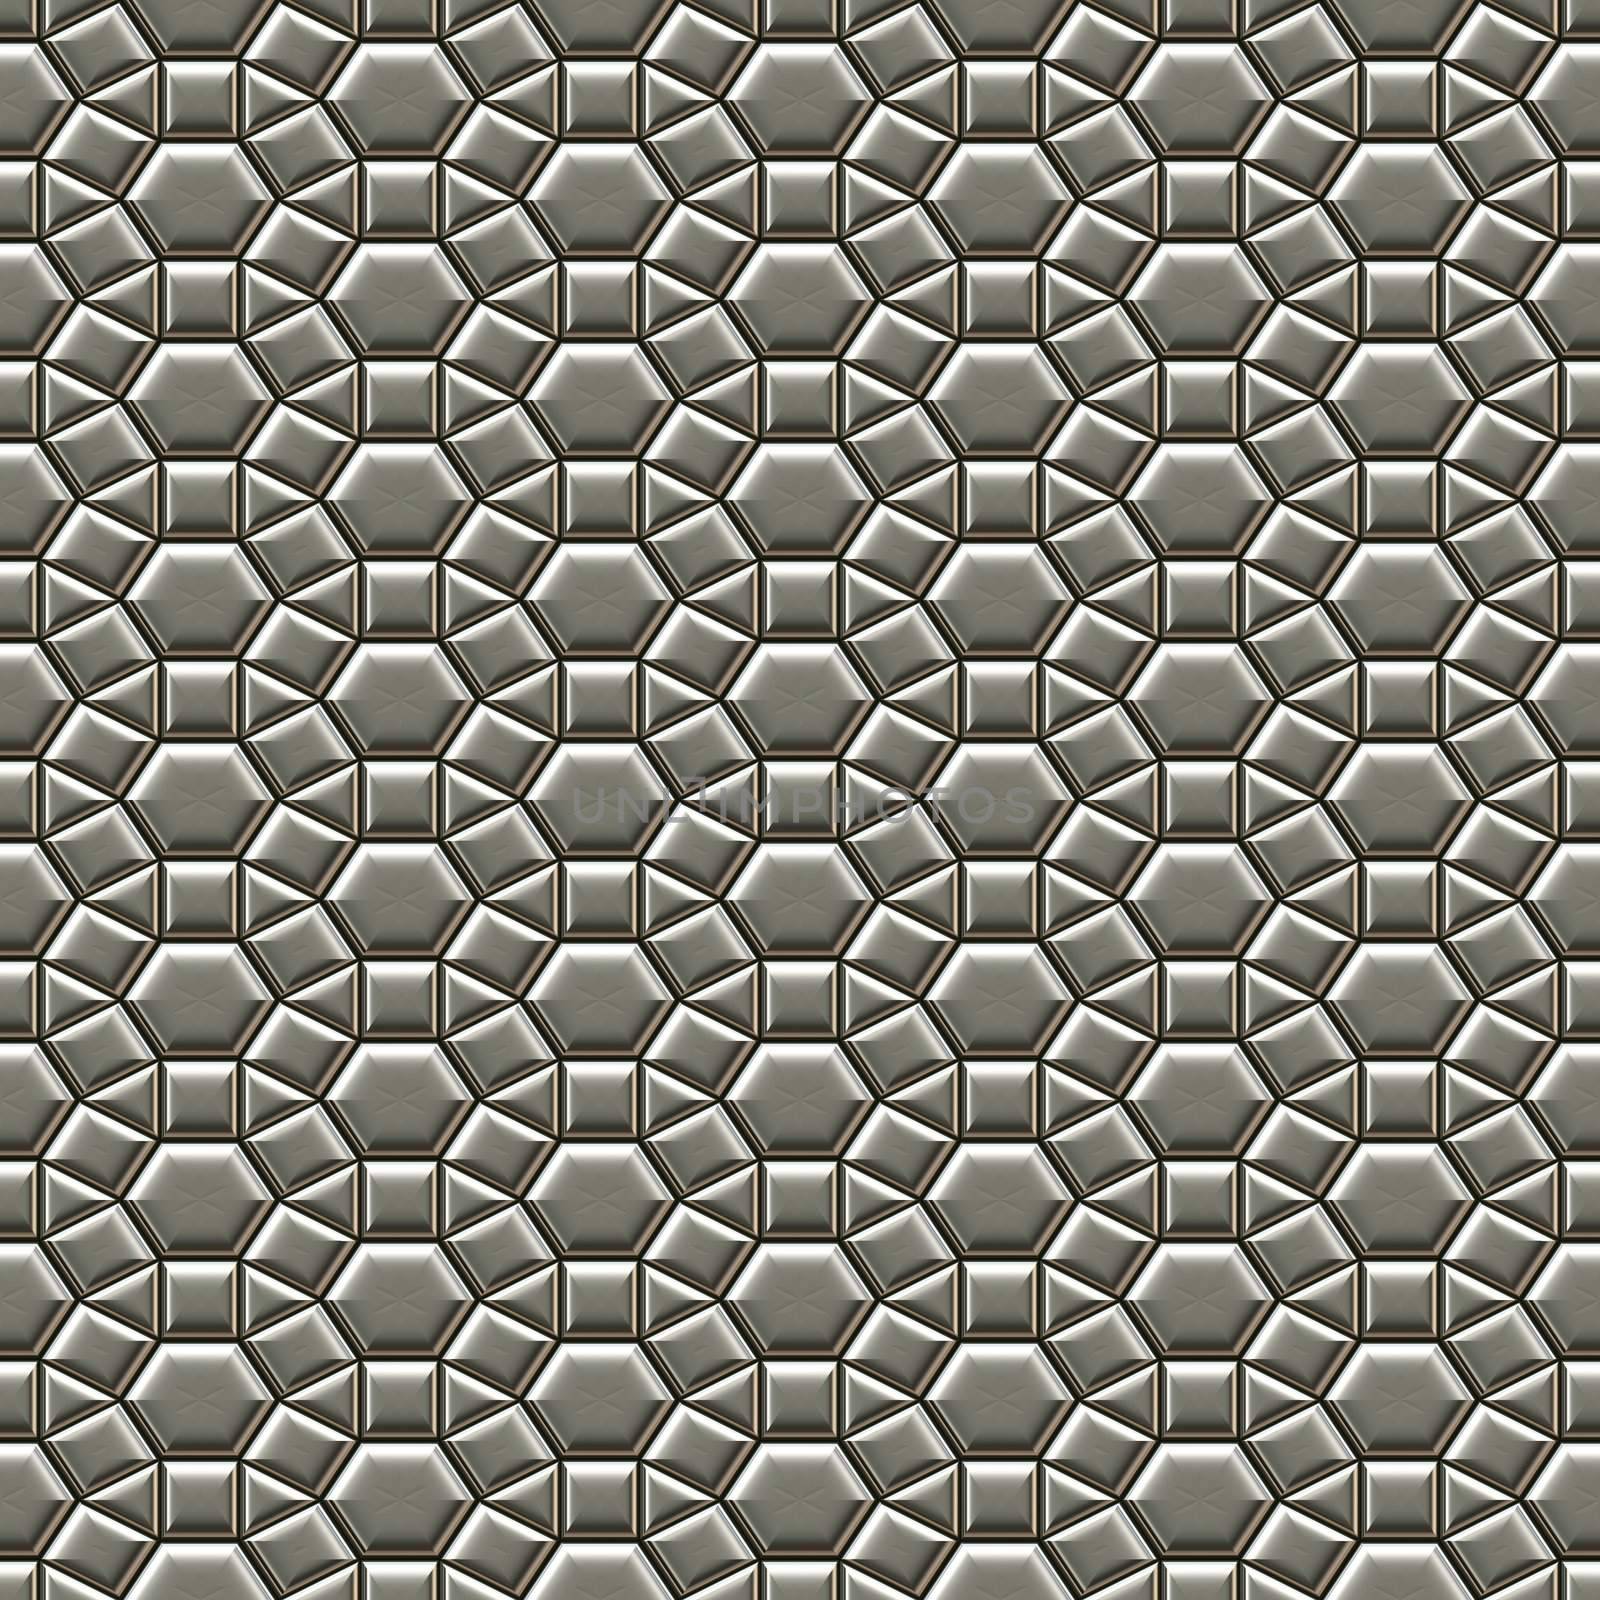 metallic tiles that tile seamlessly as a pattern